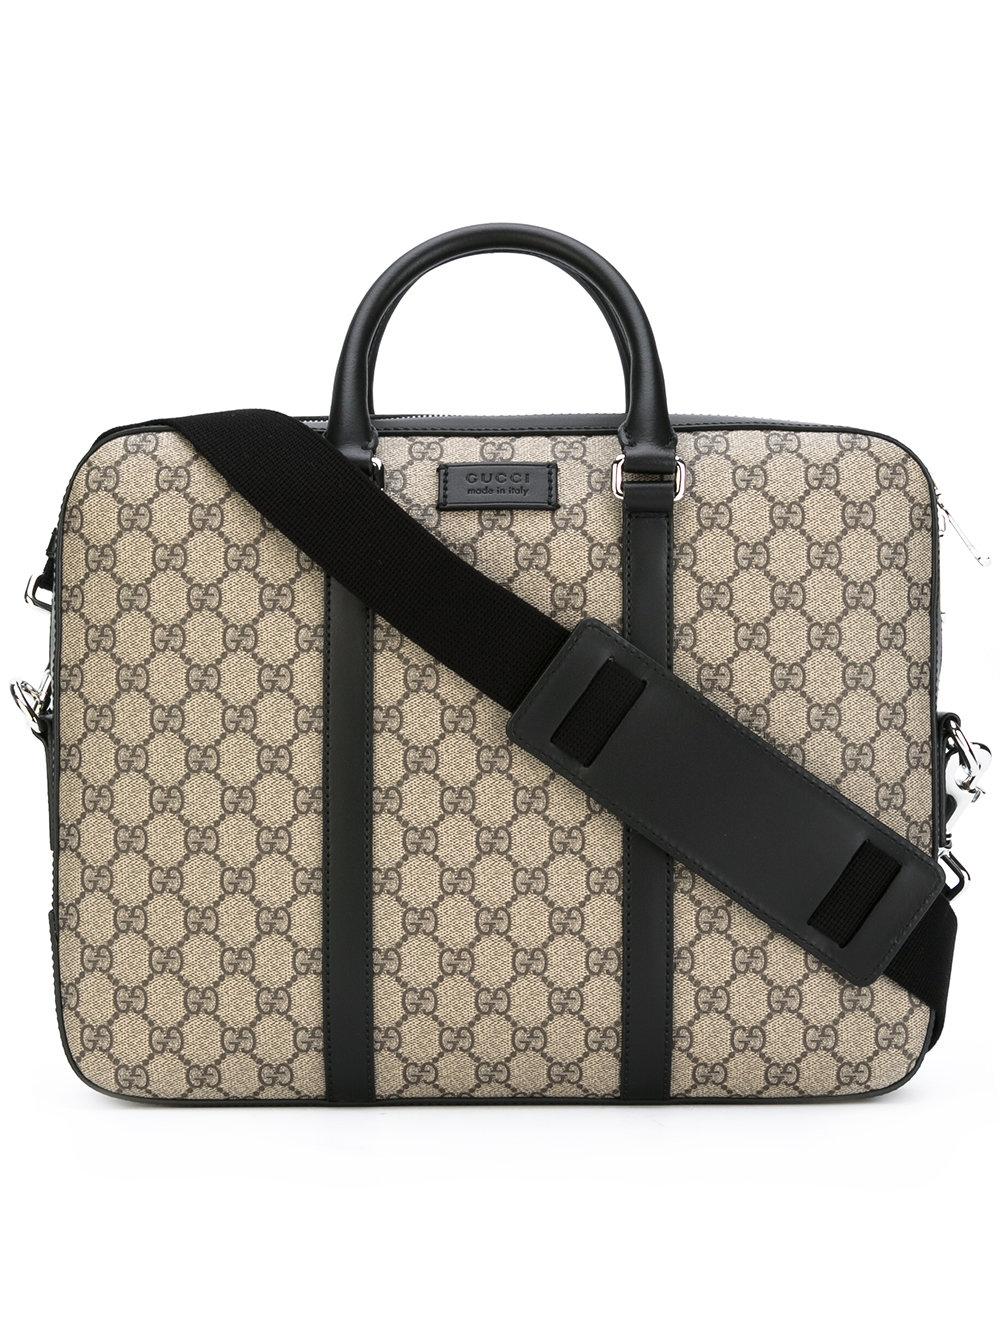 Gucci Gg Supreme Laptop Bag in Black